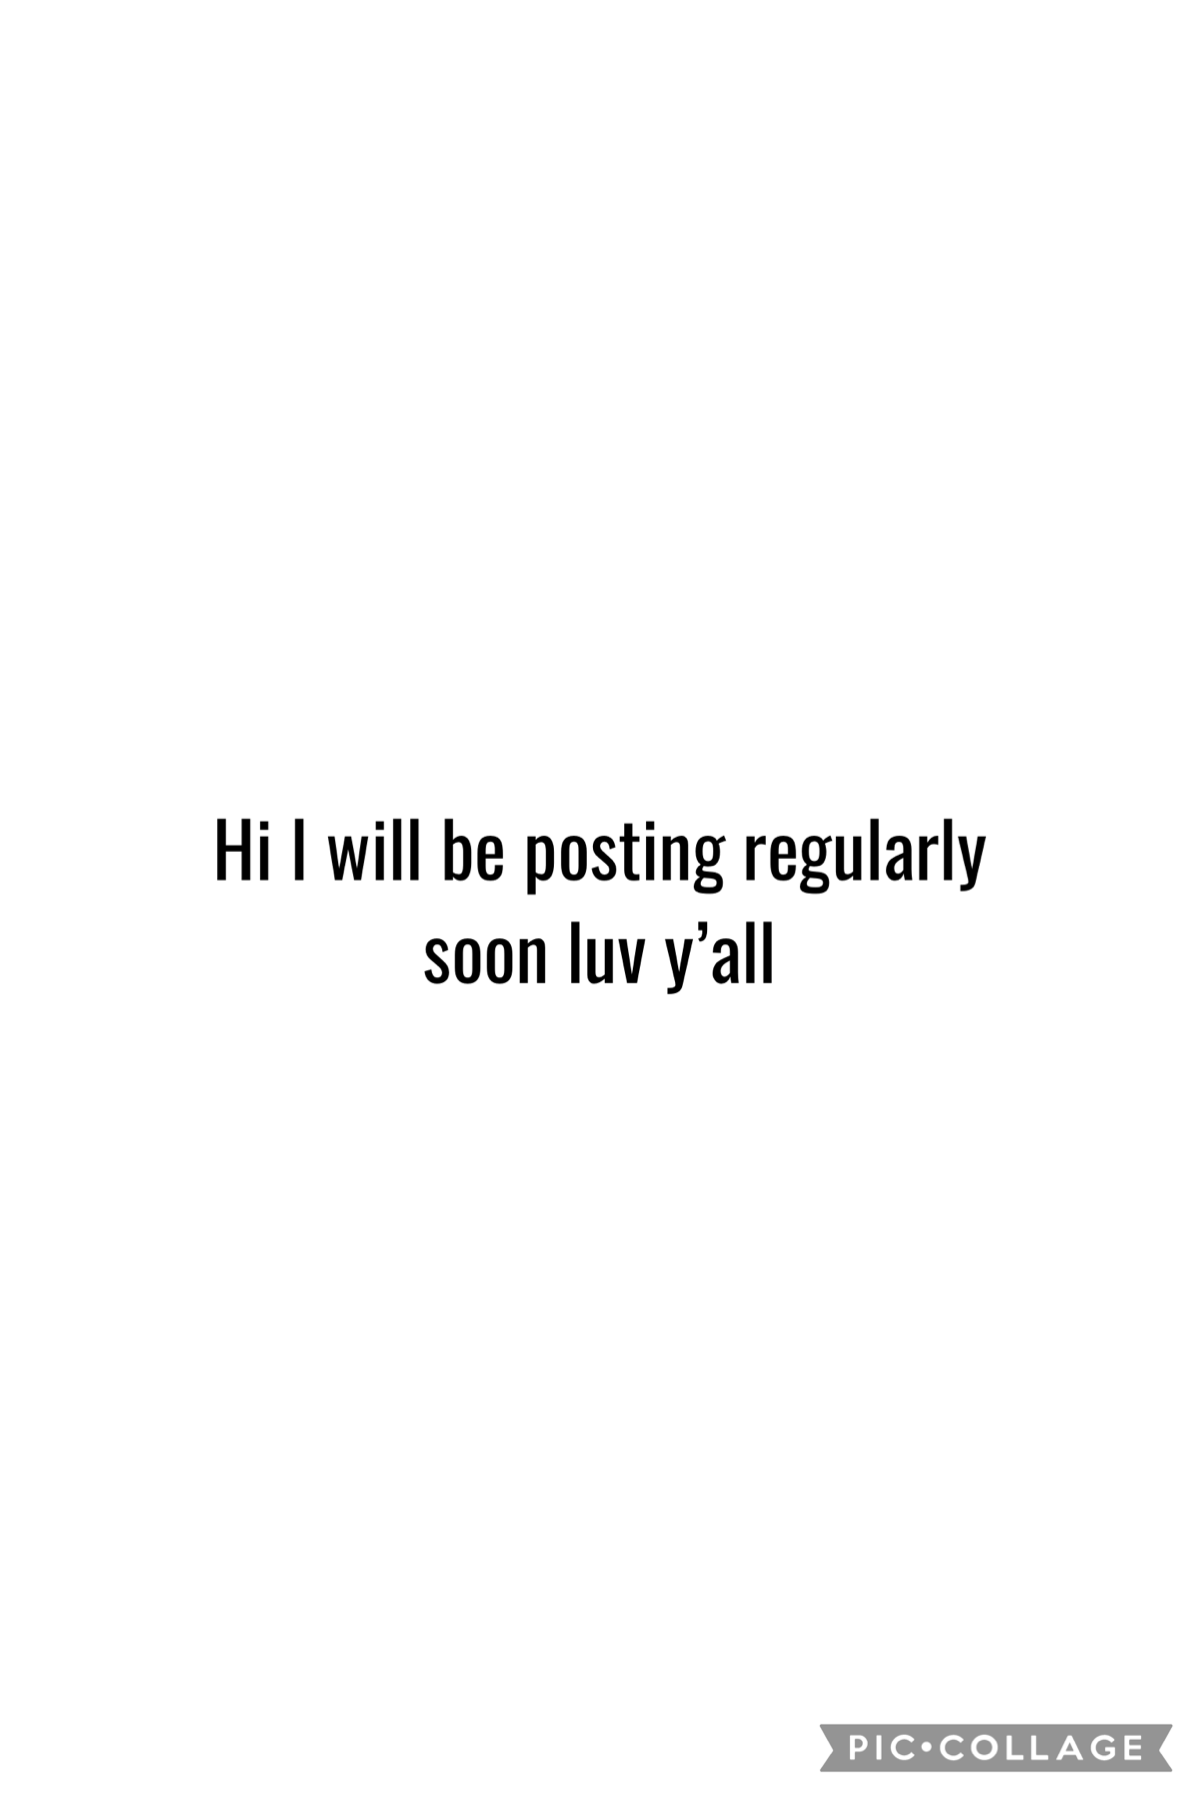  Look a post!😱✨🙃